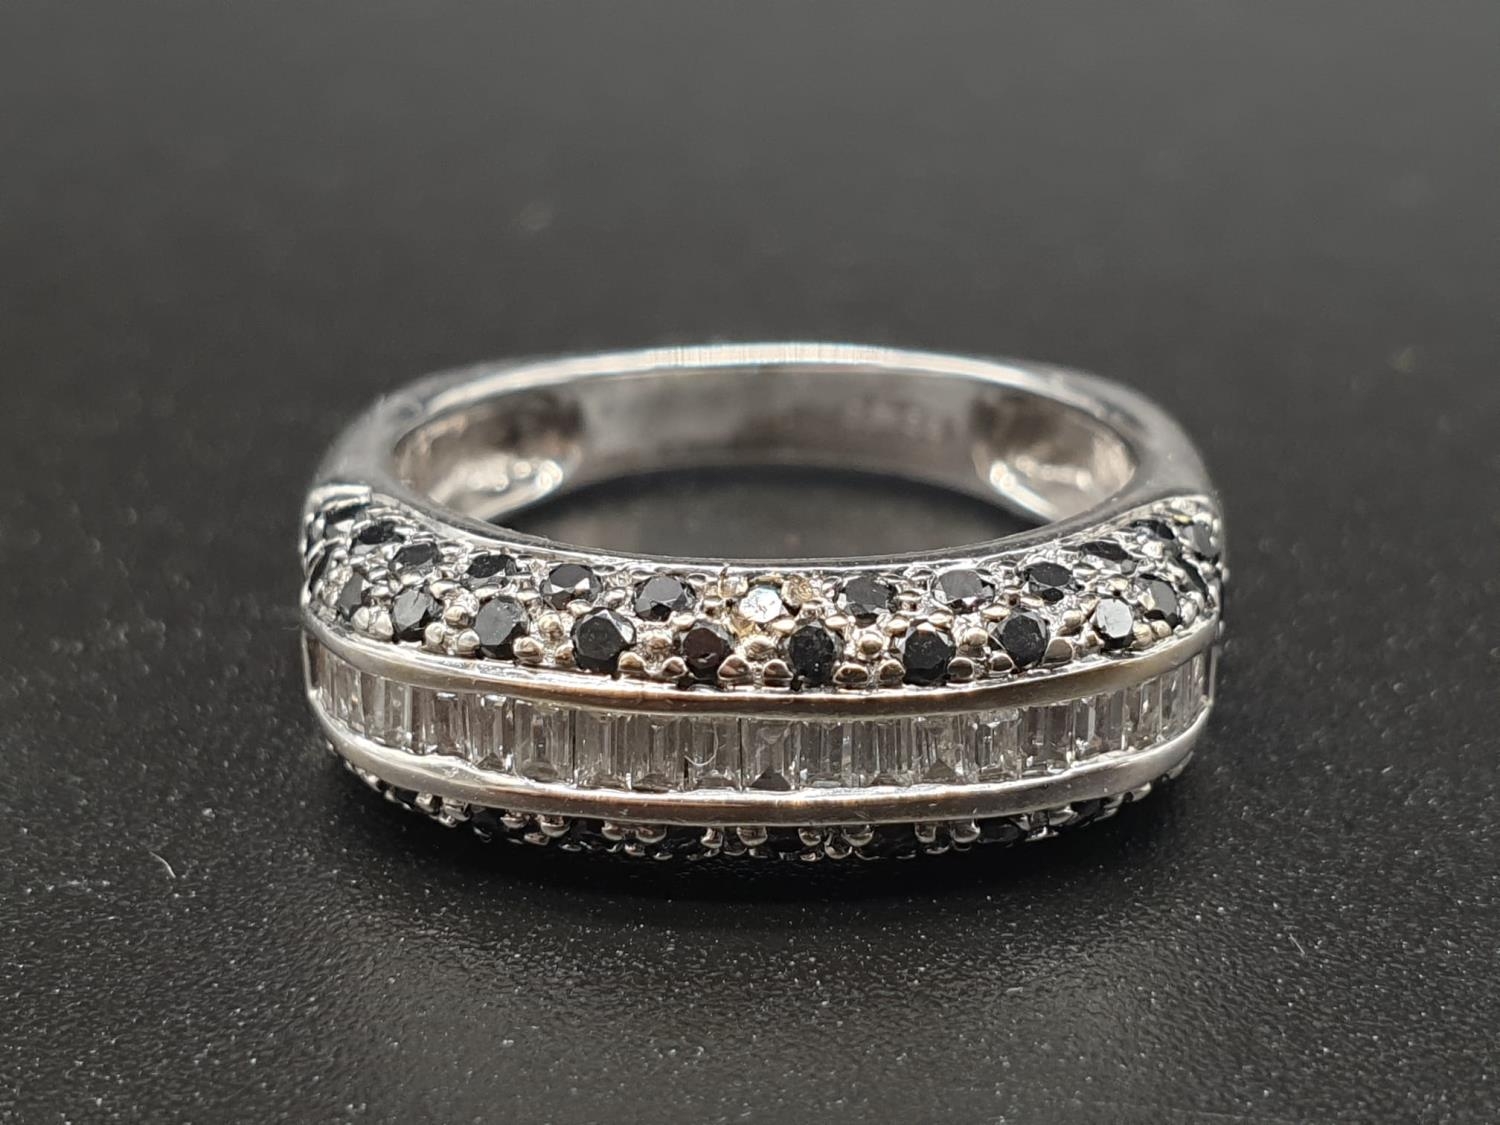 An 18K White Gold White and Black Diamond Ring. Size P. 1ct diamond, 6.3g